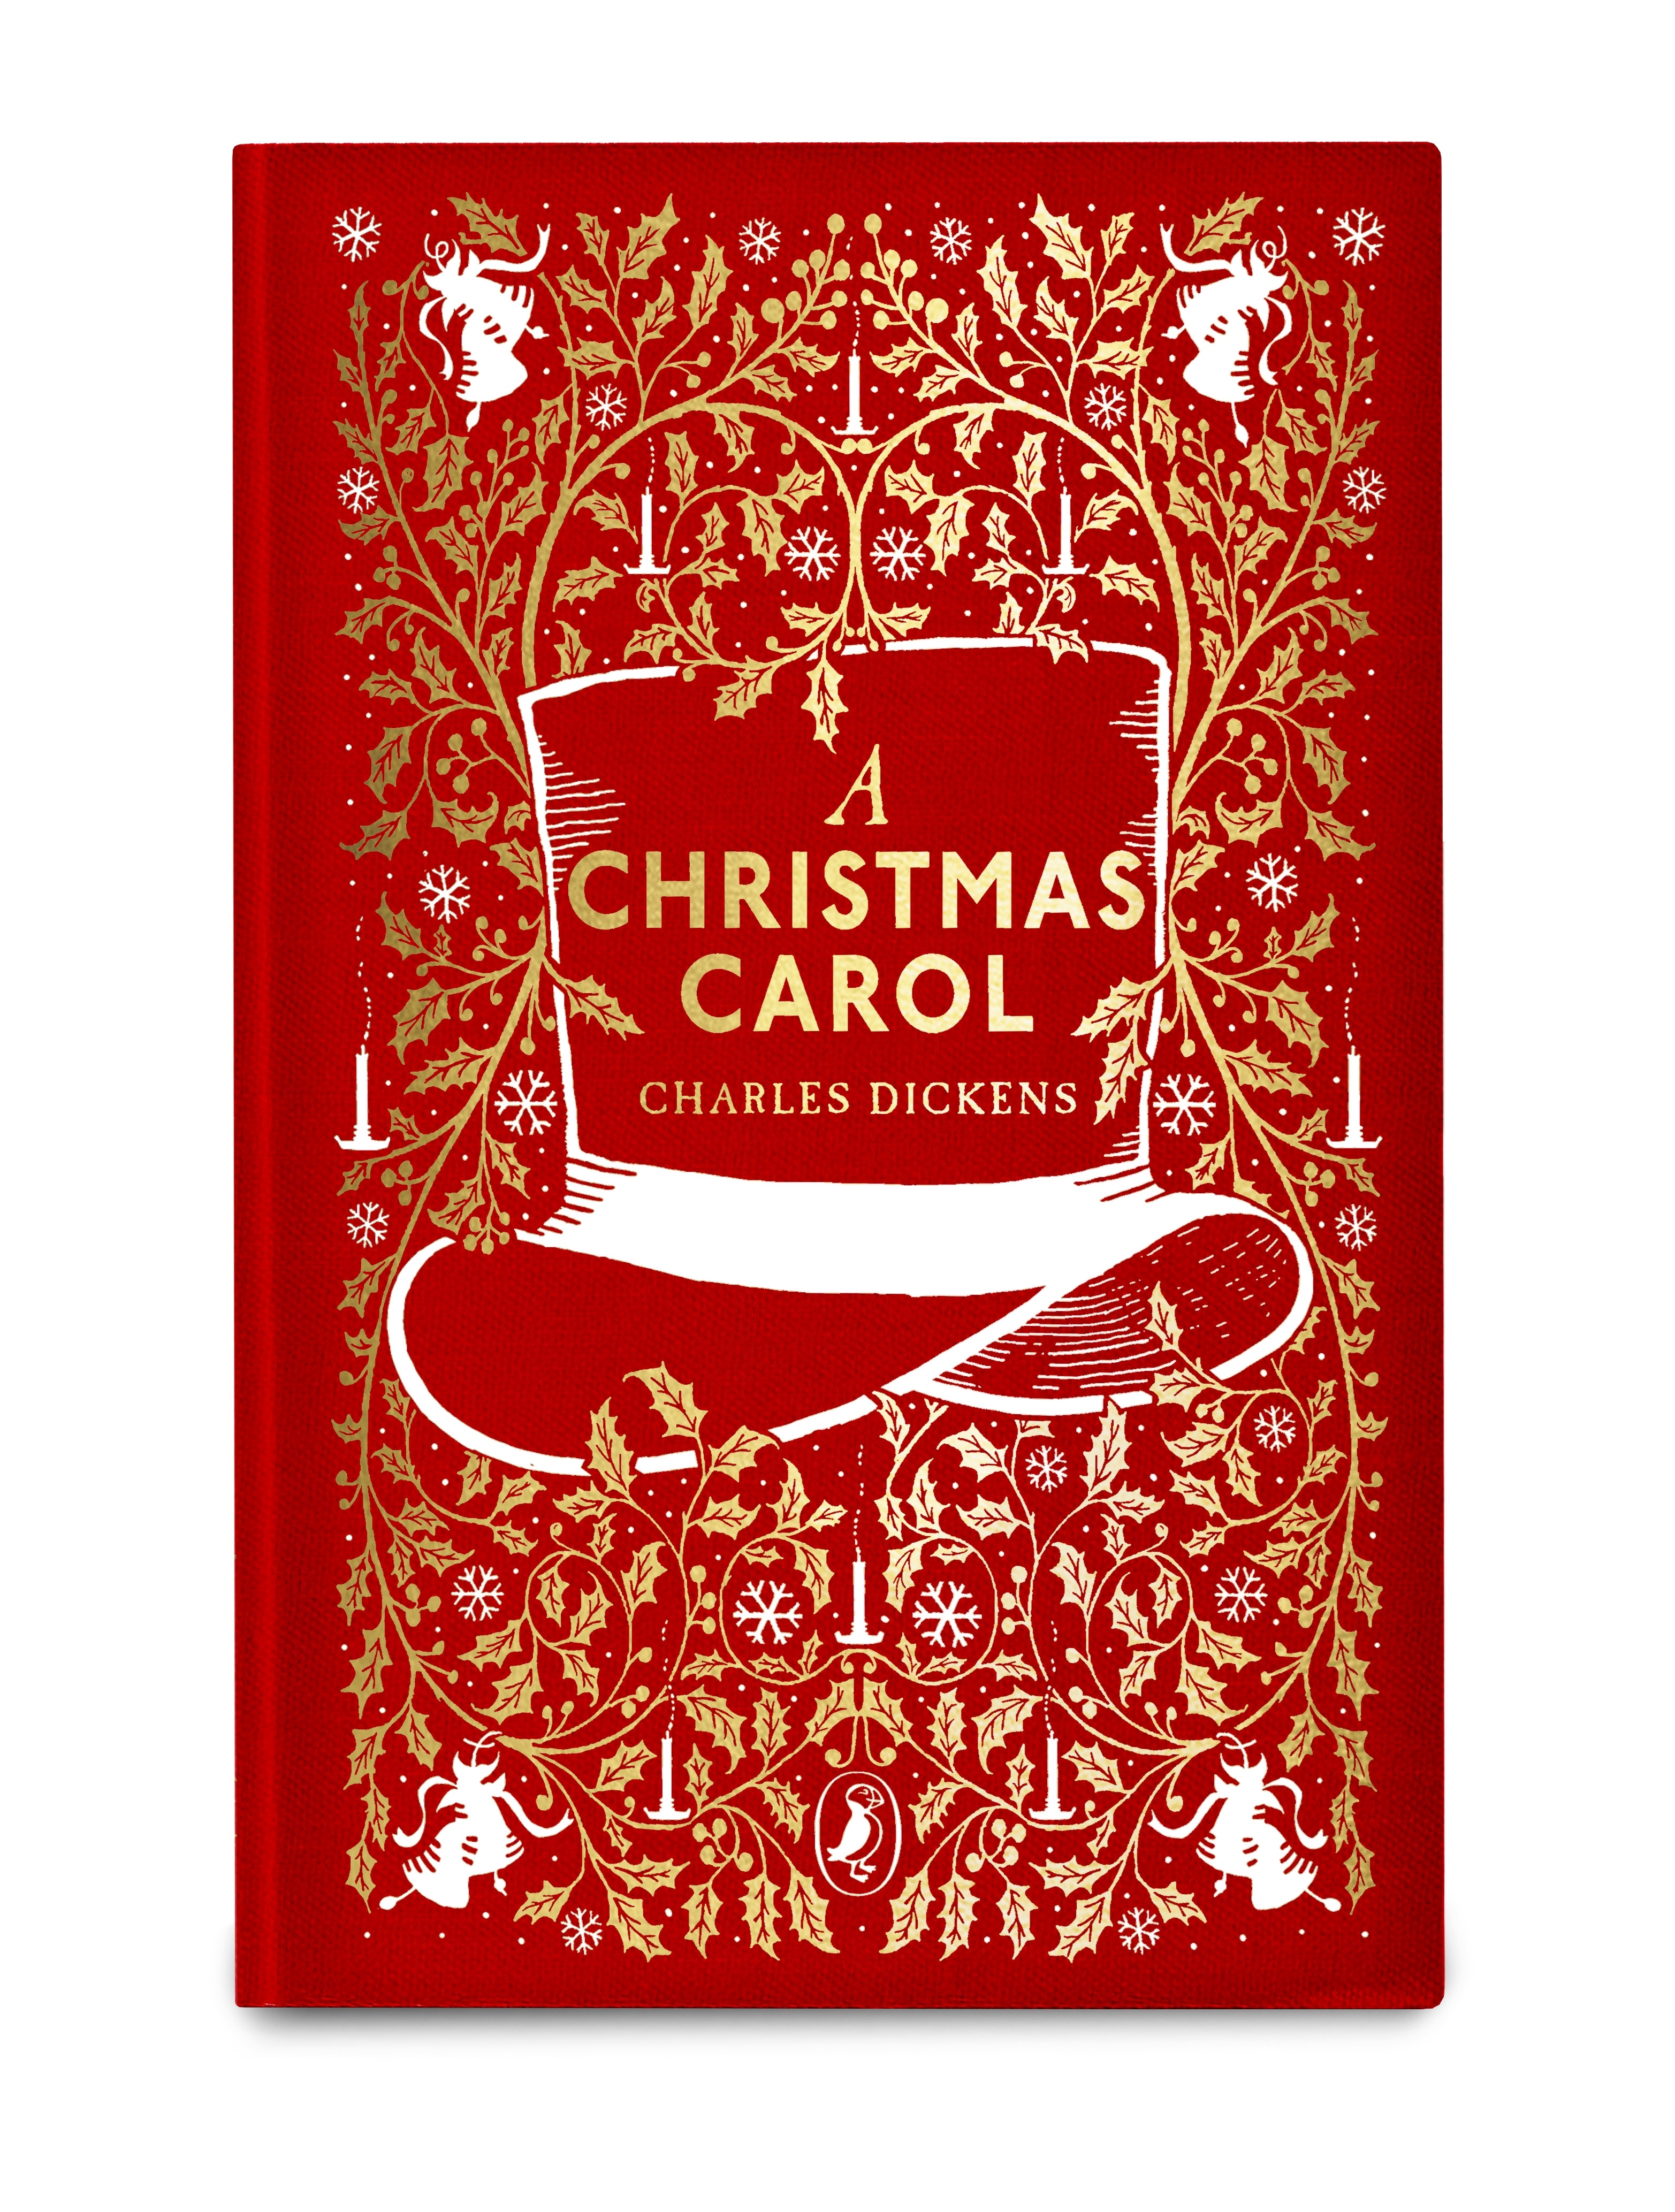 Book “A Christmas Carol” by Charles Dickens — September 5, 2019